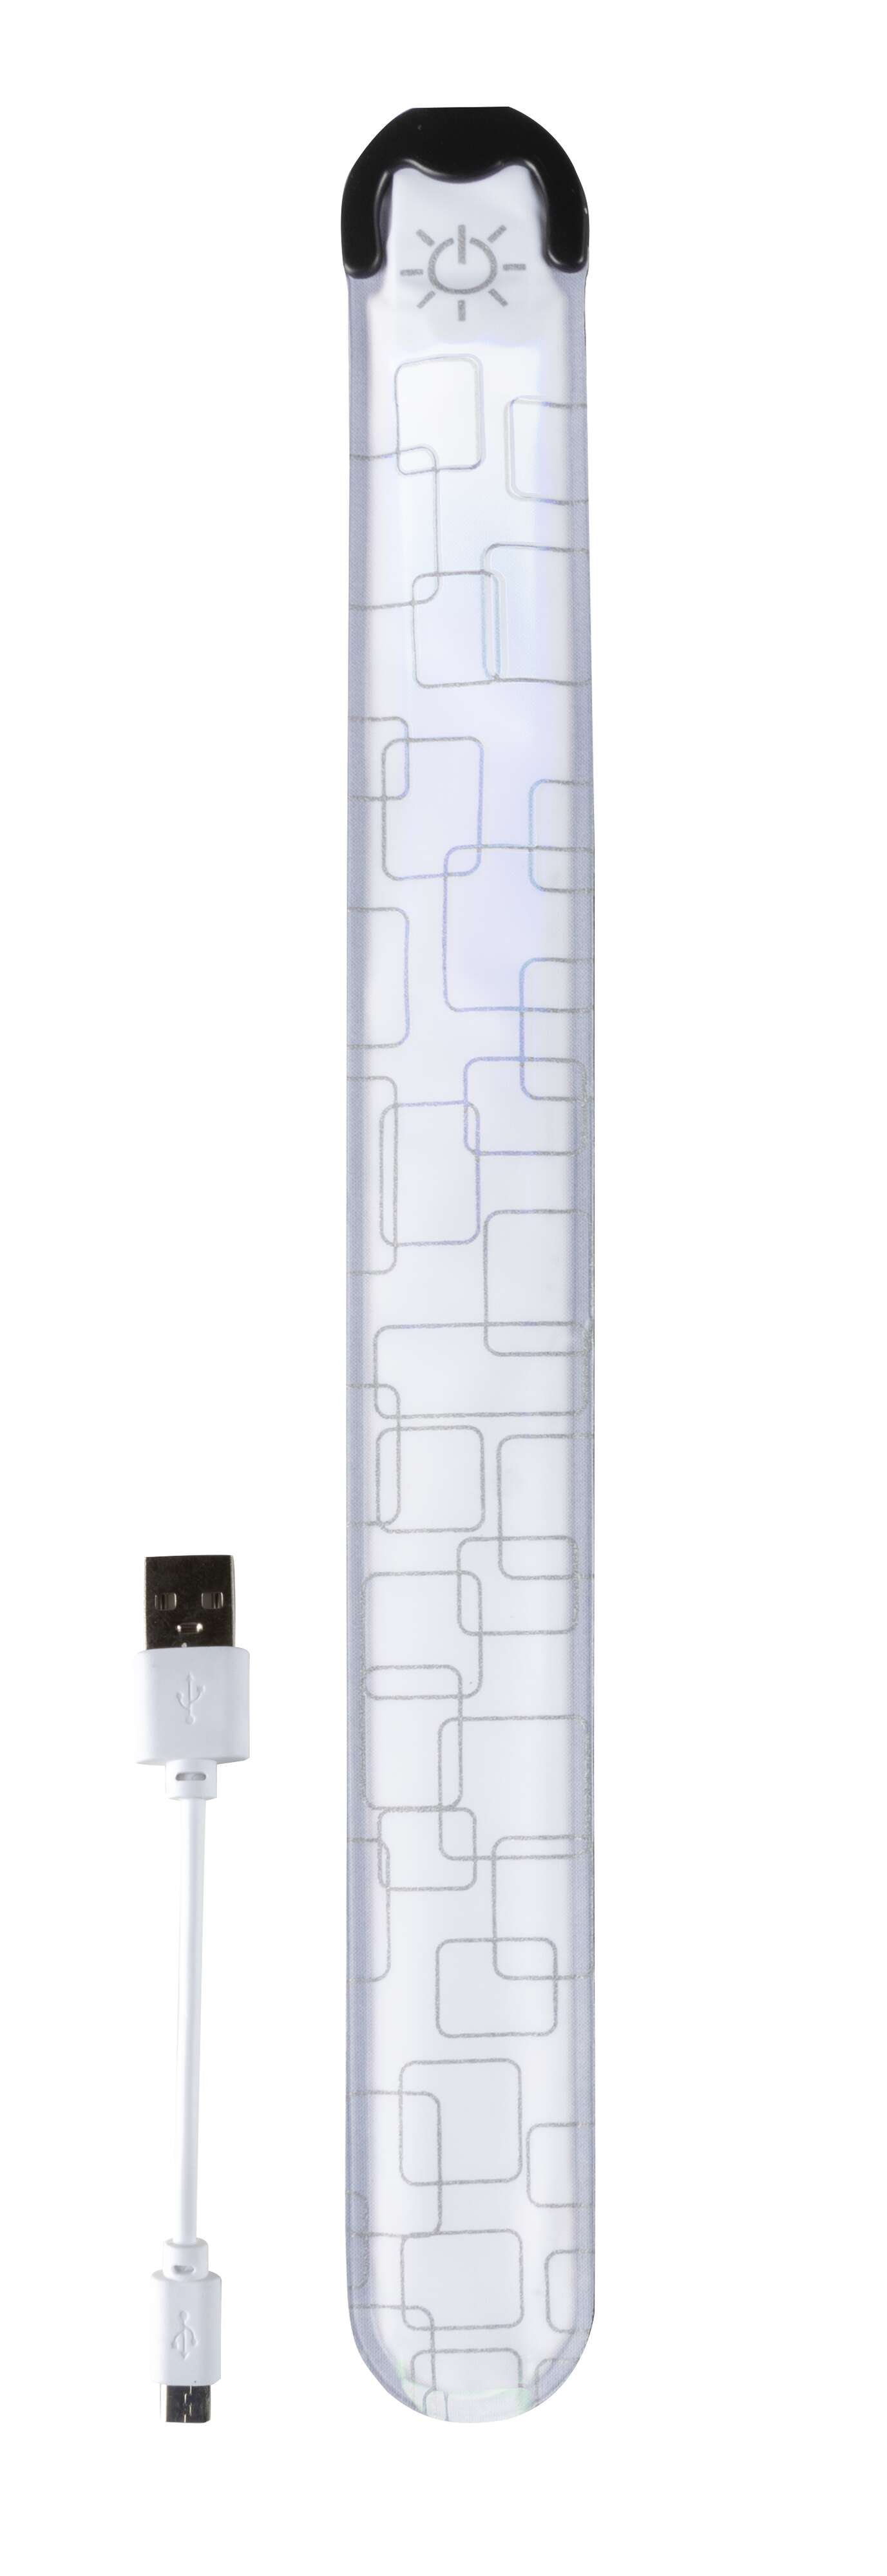 LED slap wrap, luminous slap wrap with USB charging option 36x3.5 cm silver